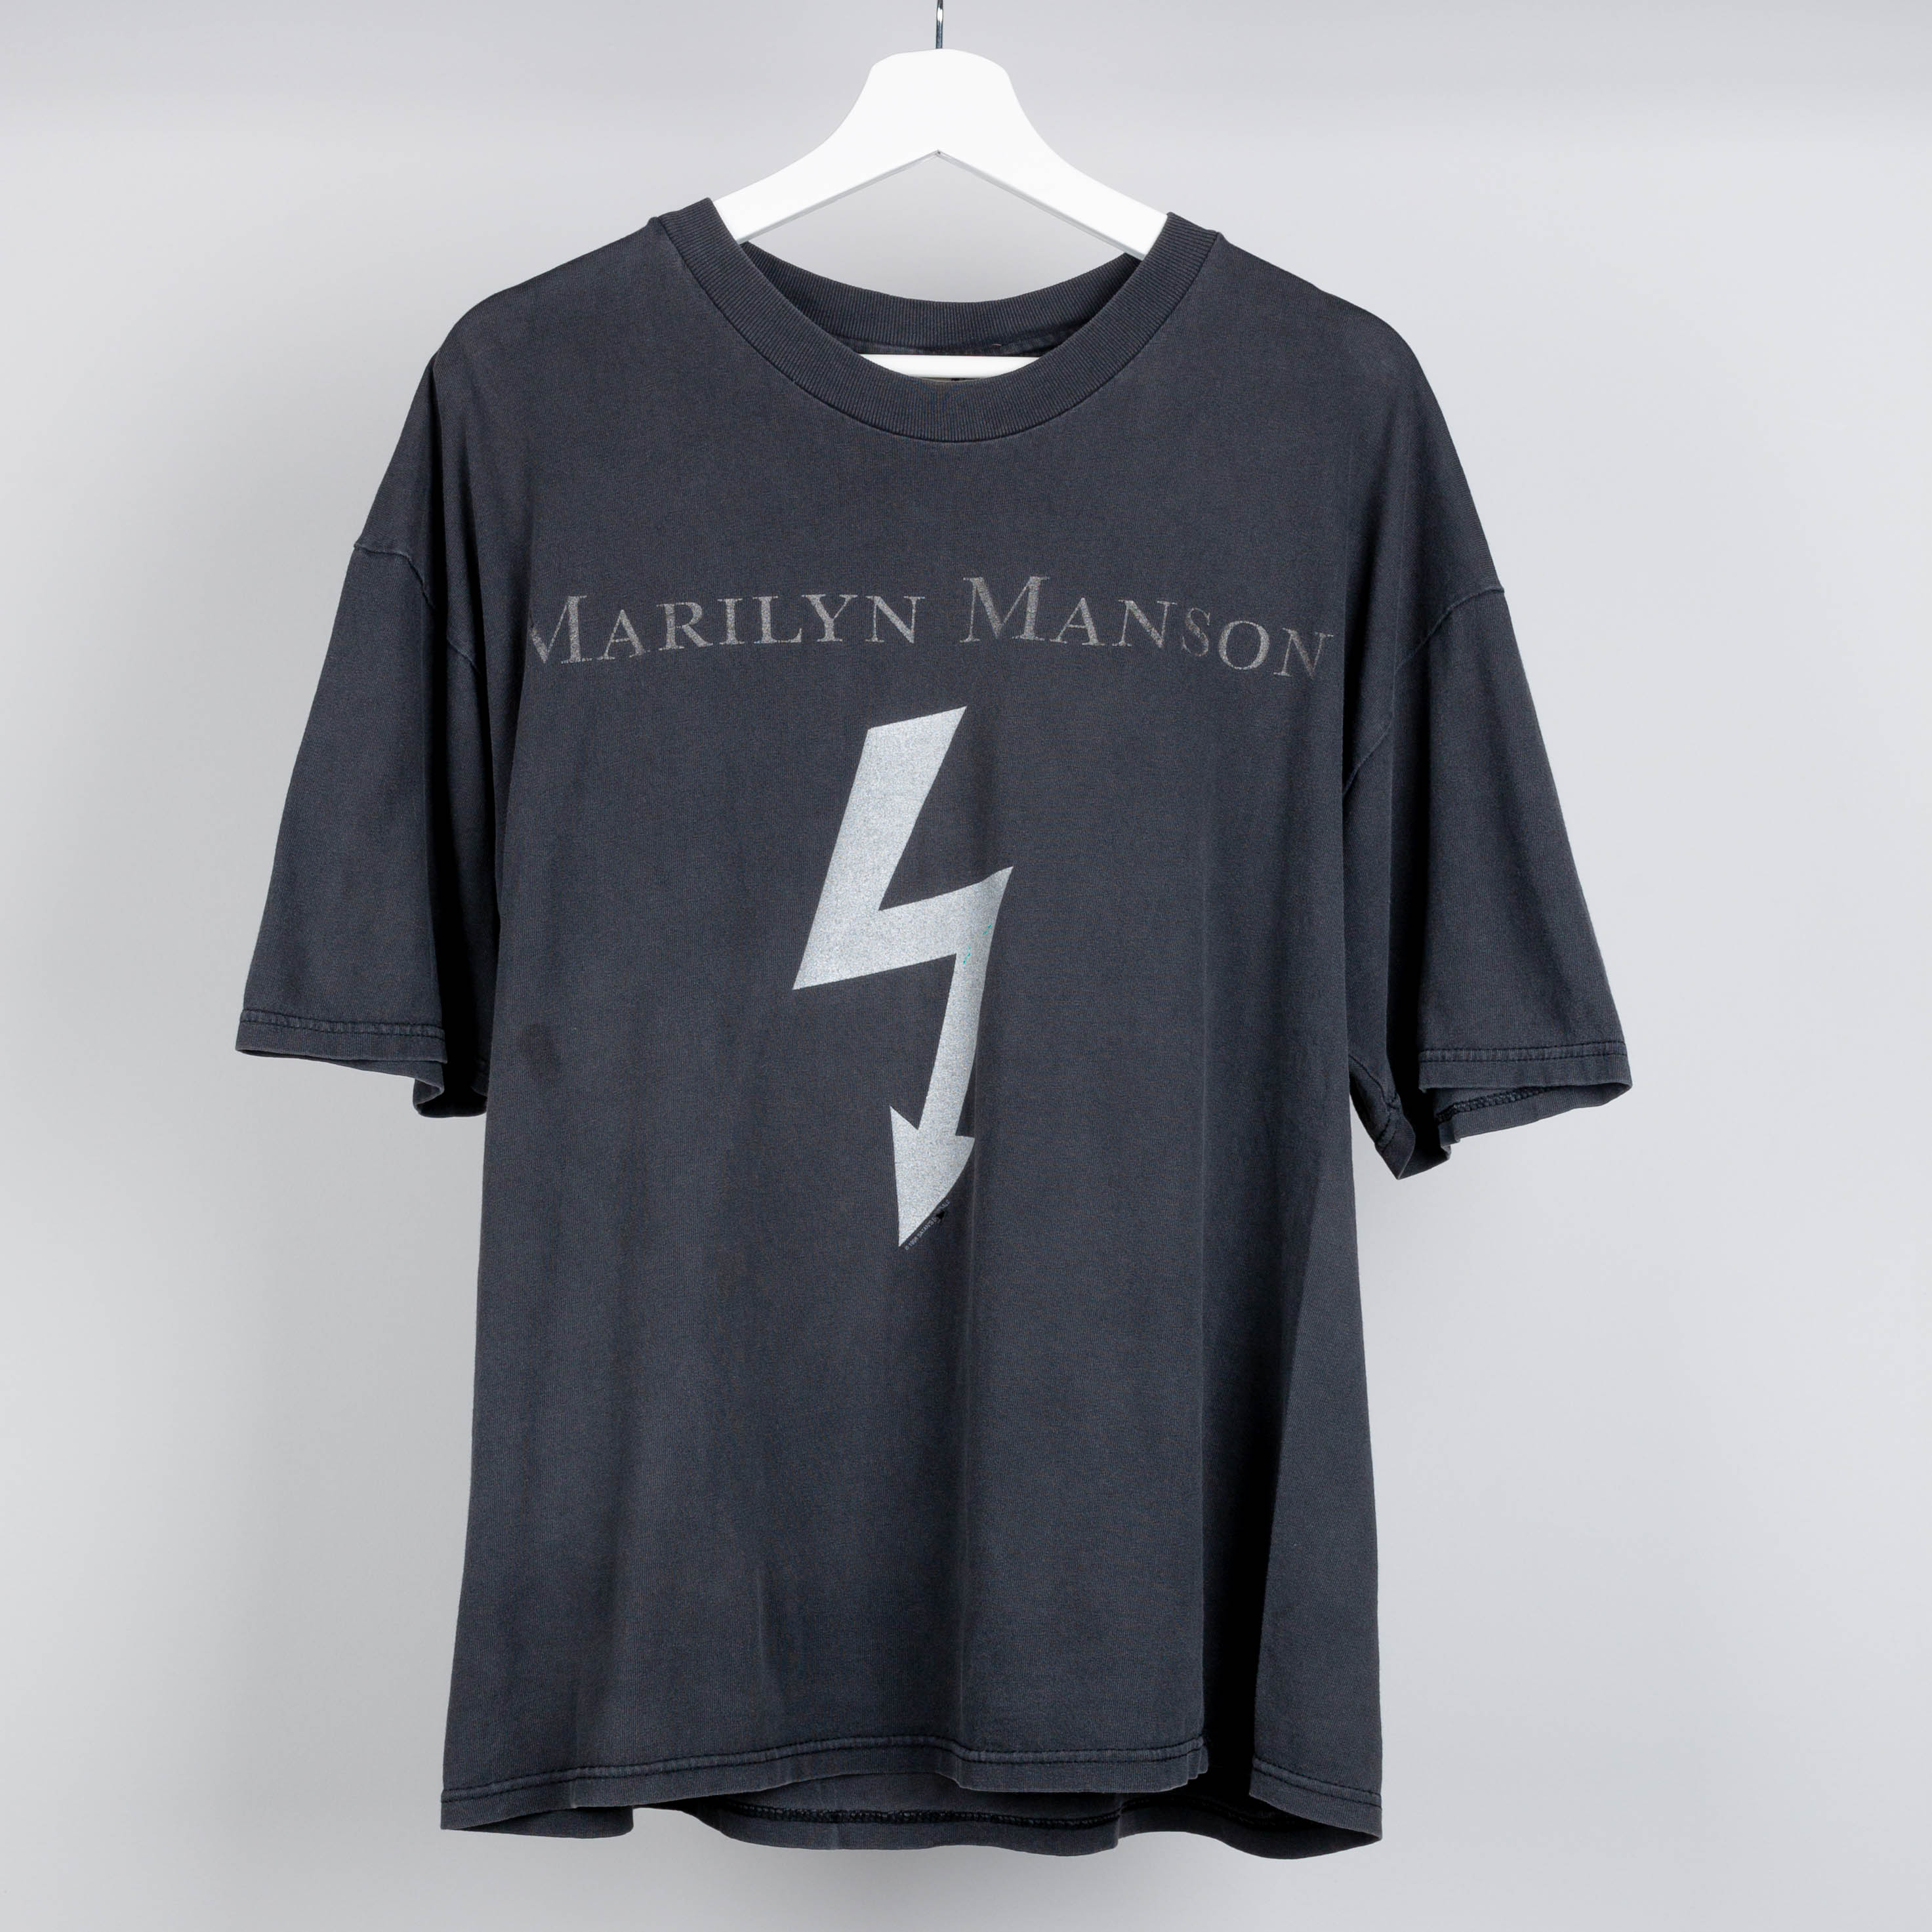 1996 Marilyn Manson Satans Bakesale T-Shirt Size XL